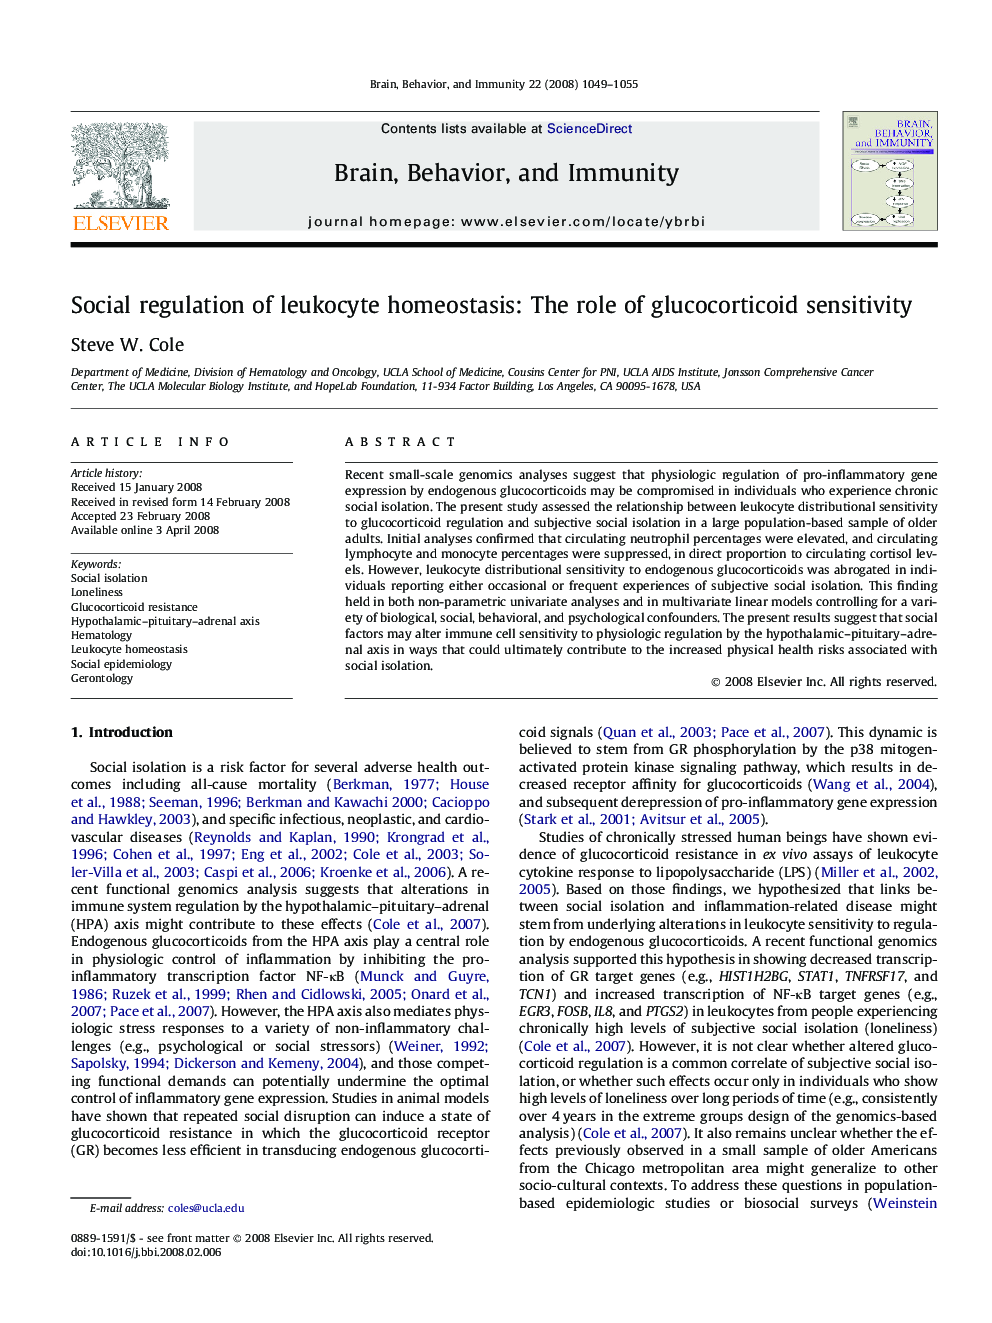 Social regulation of leukocyte homeostasis: The role of glucocorticoid sensitivity